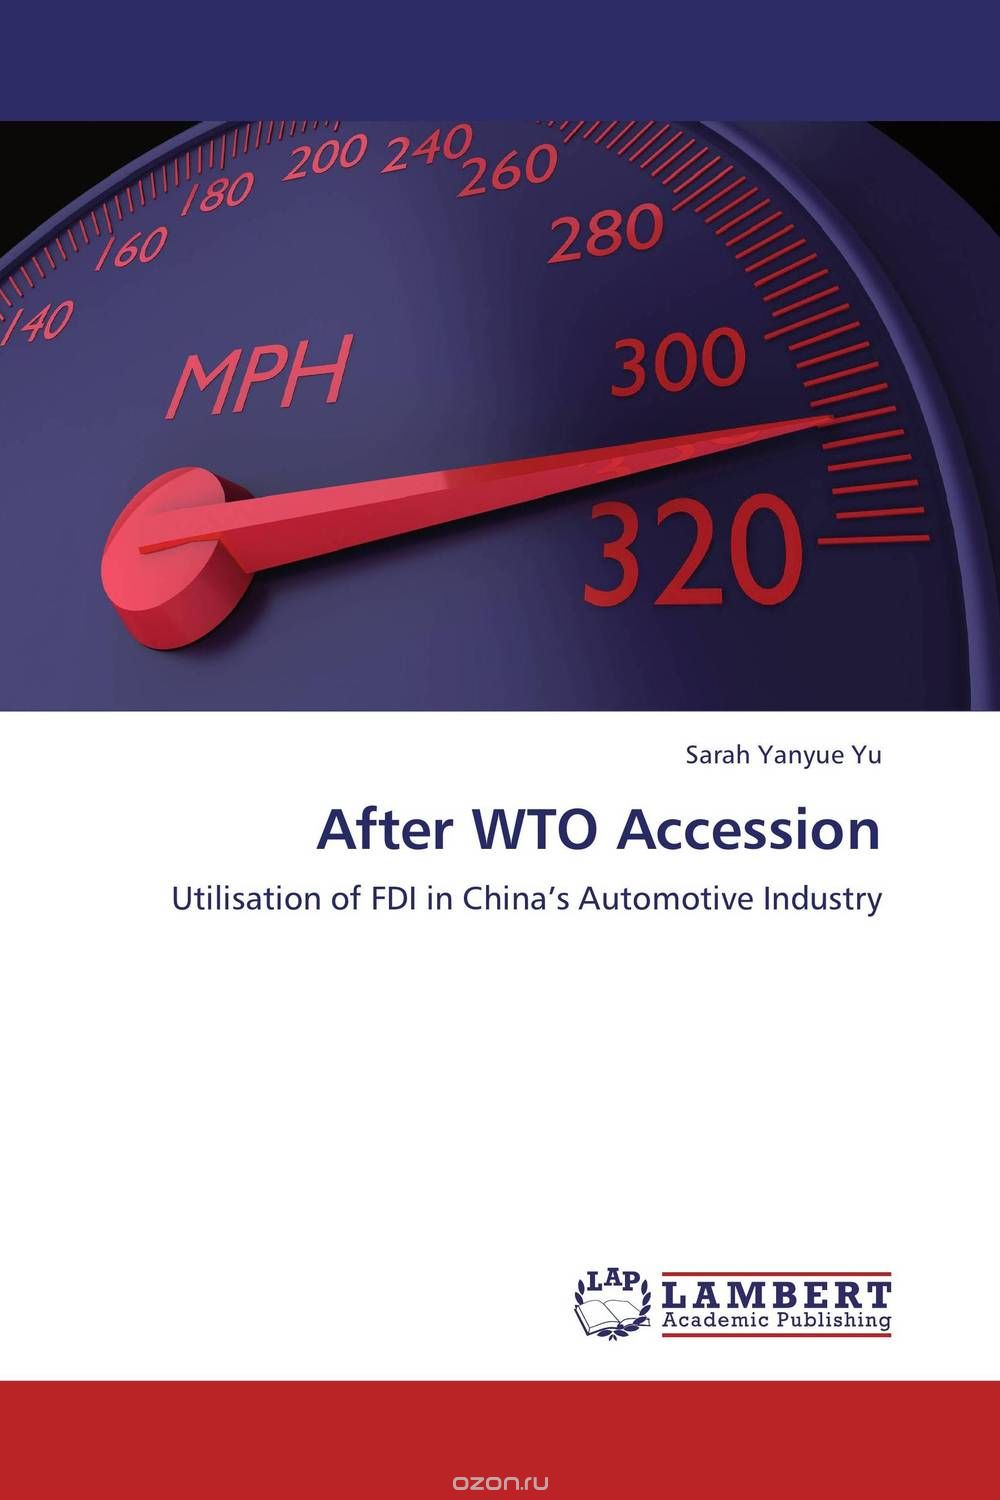 Скачать книгу "After WTO Accession"